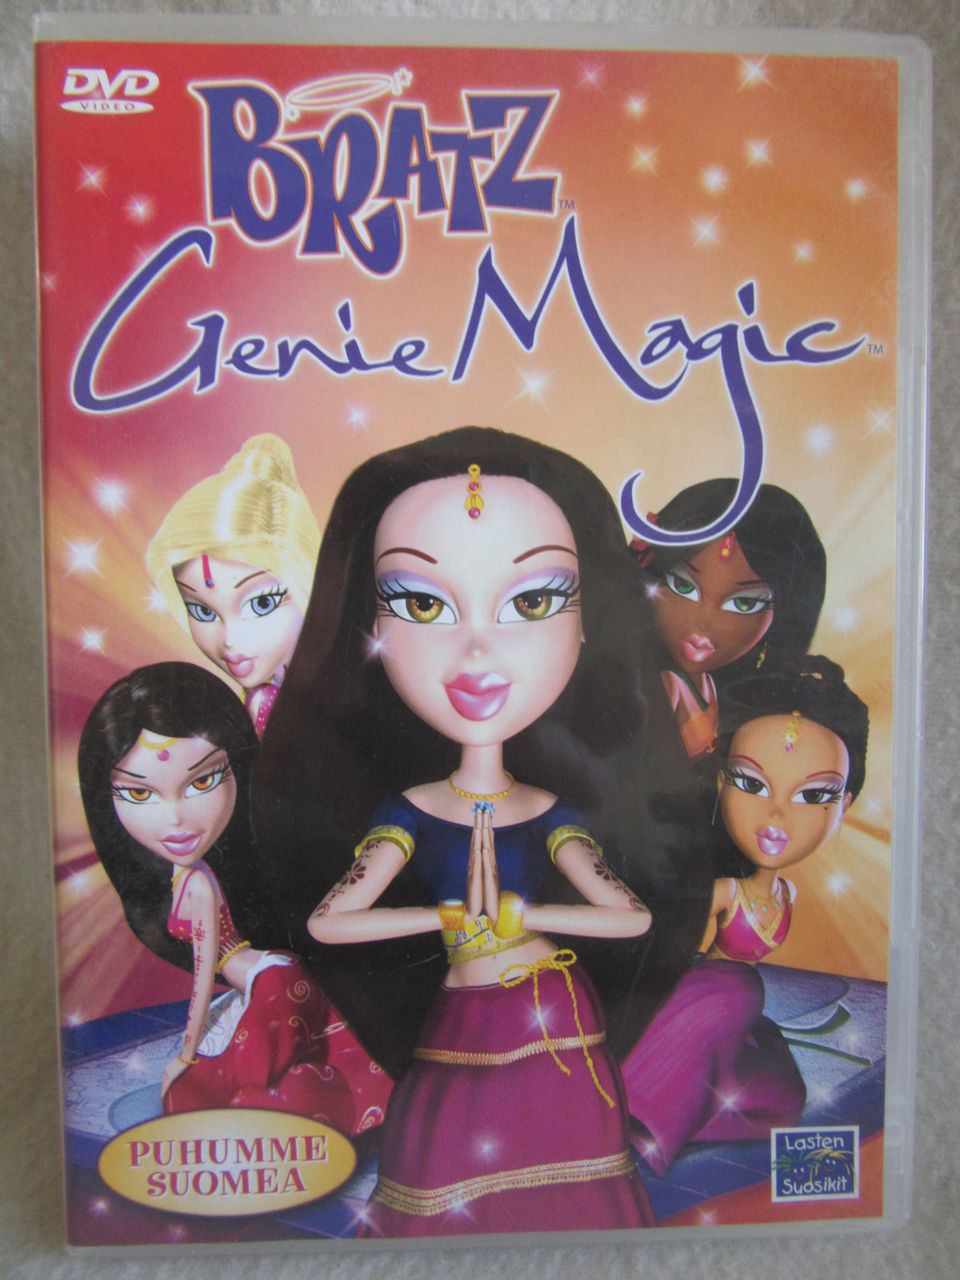 Bratz Genie Magic dvd